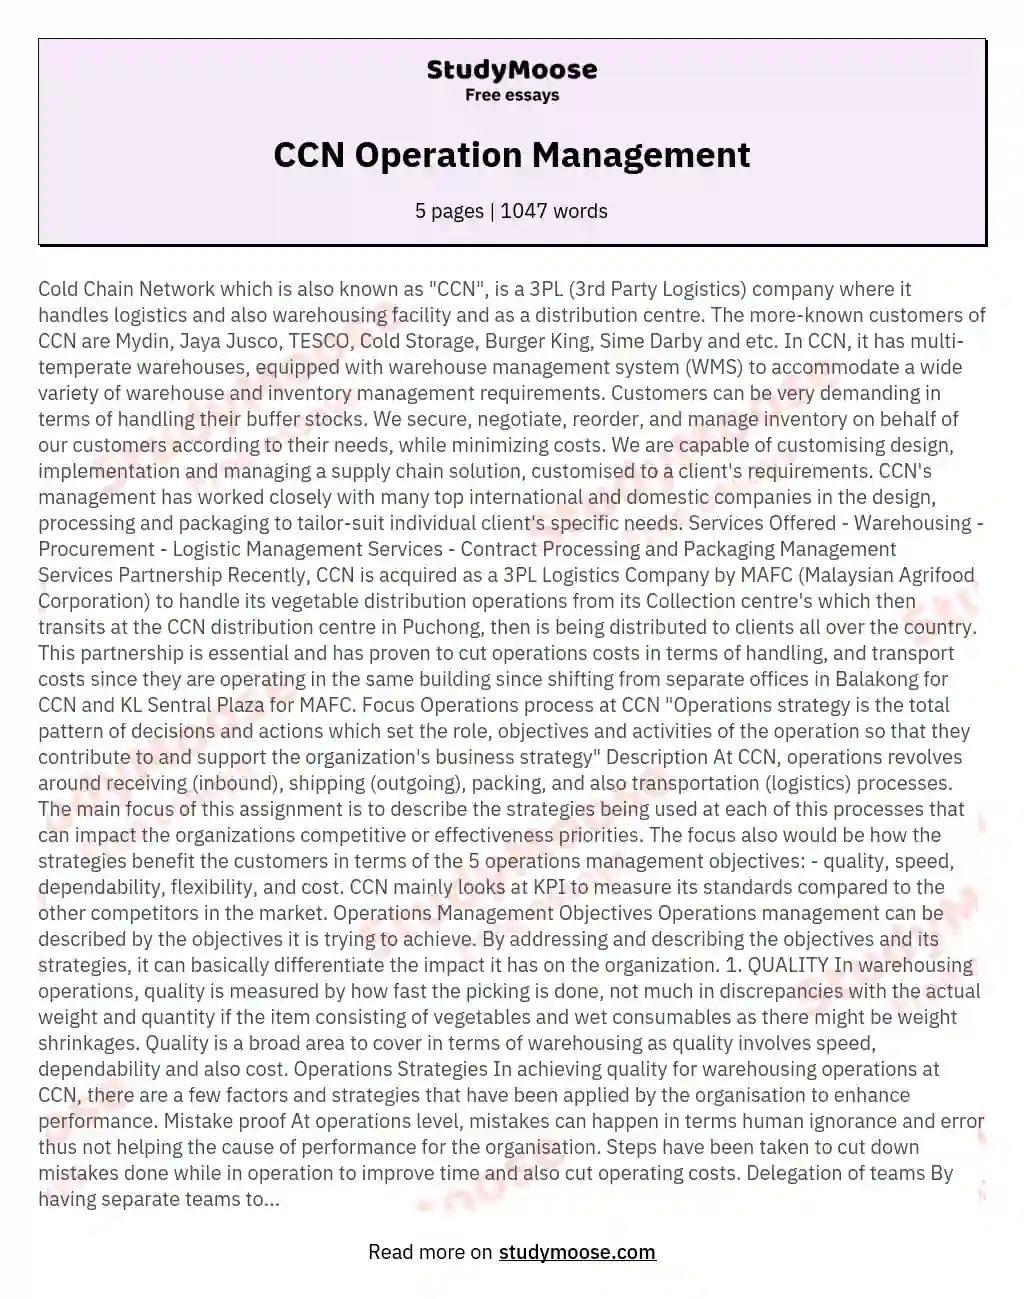 CCN Operation Management essay